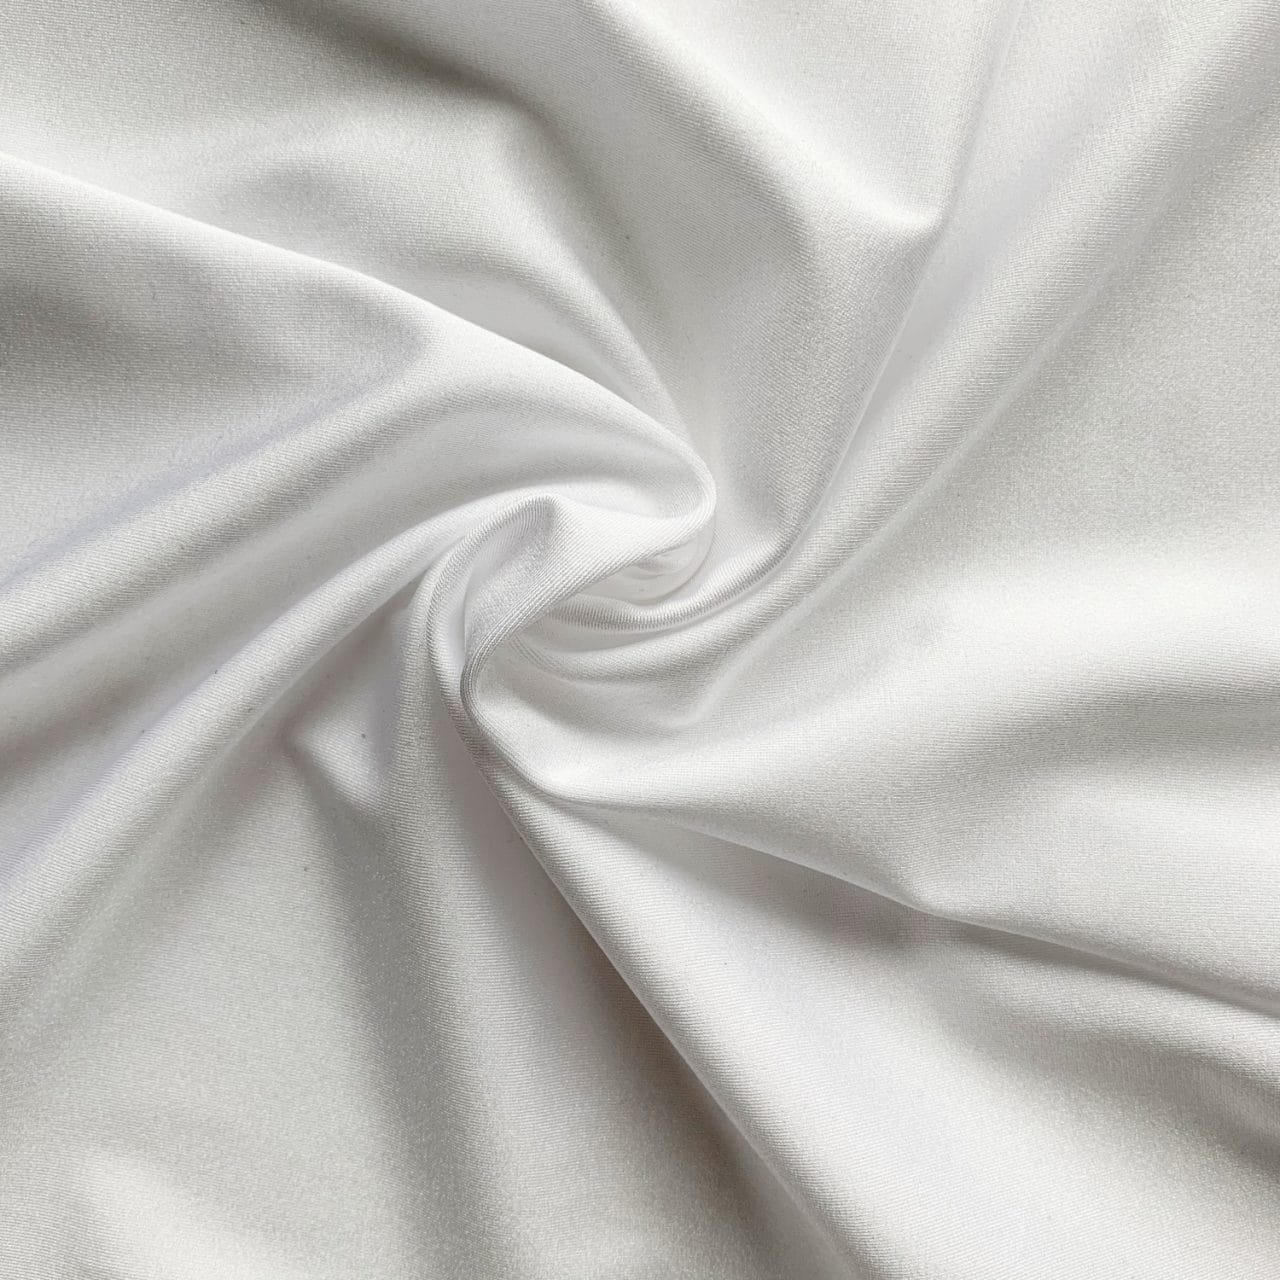 https://www.solidstonefabrics.com/wp-content/uploads/2018/06/Carvico-Sumatra-Bianco-Shiny-White-Nylon-Lycra-Fabric-for-Swimwear-Solid-Stone-Fabrics-Inc..jpg